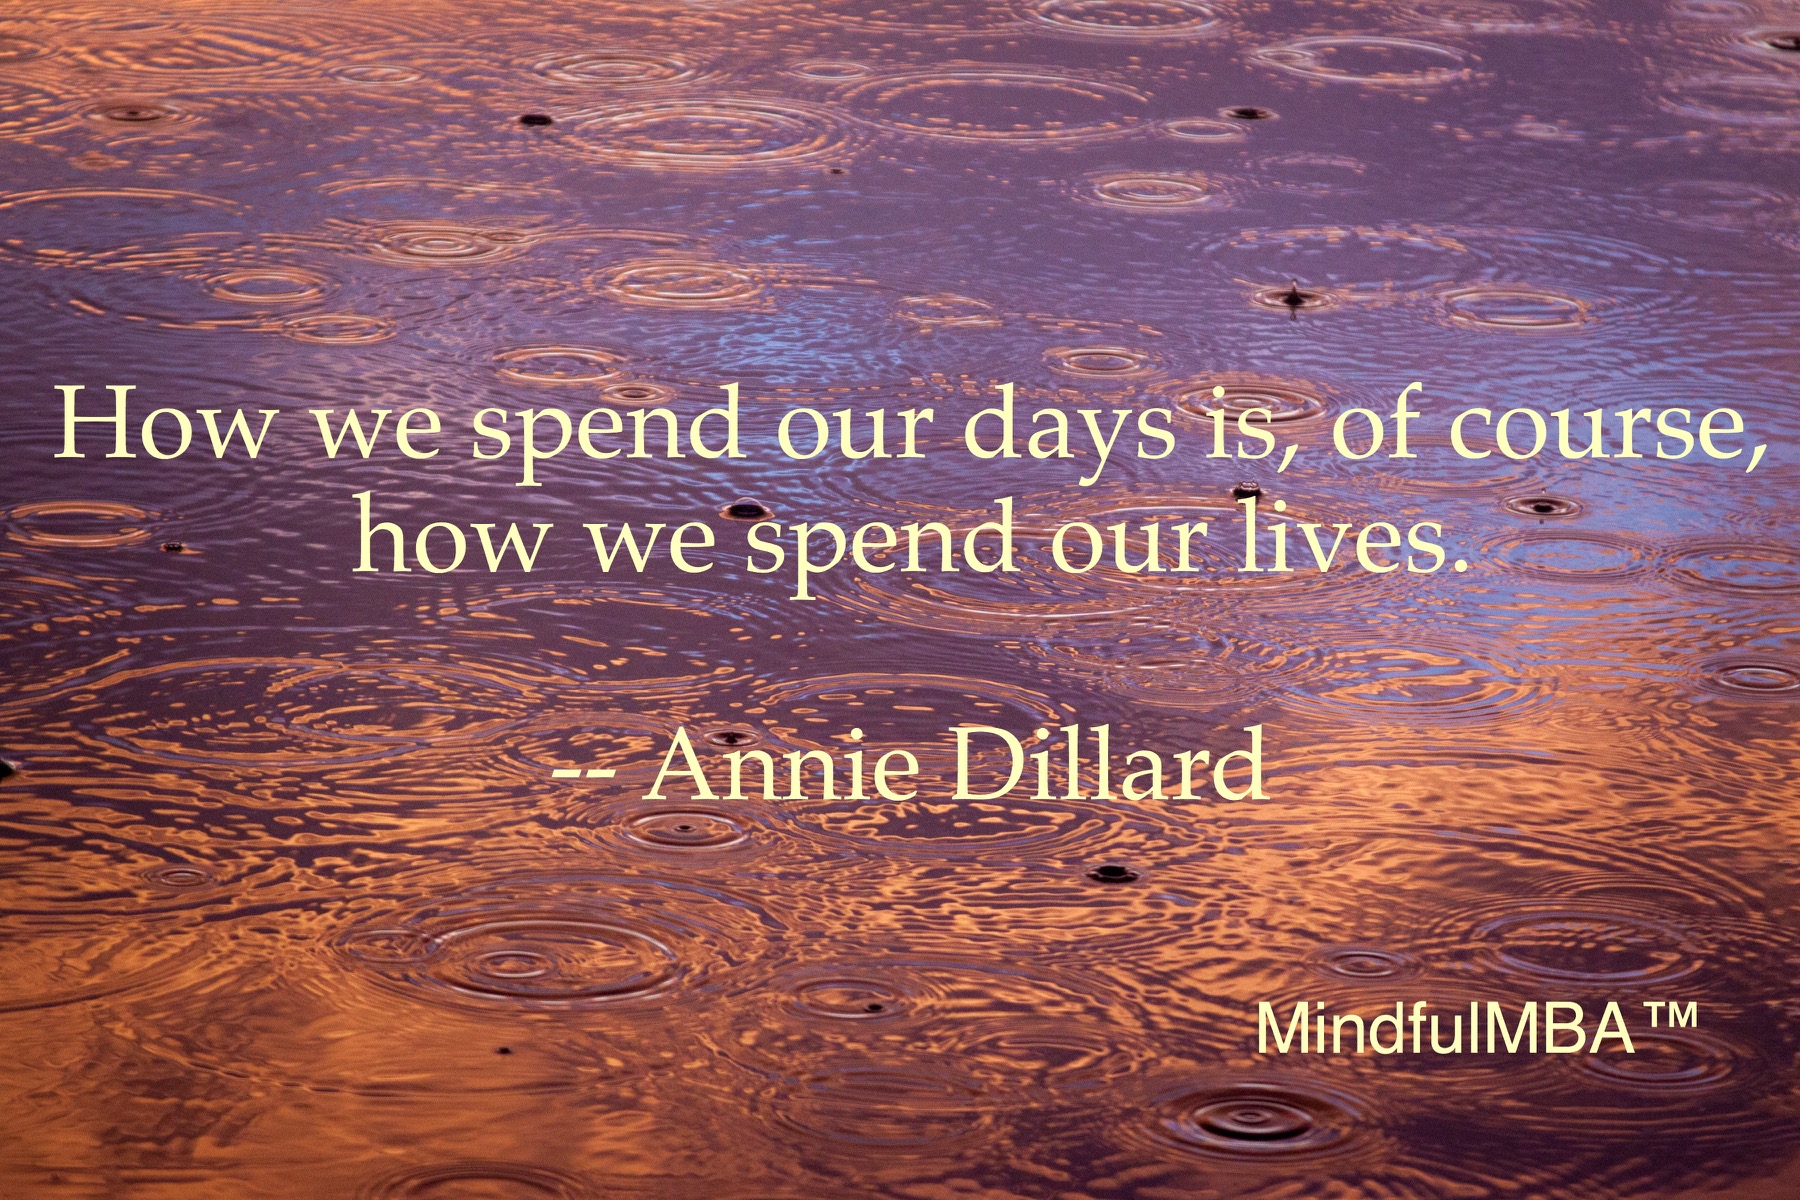 Annie Dillard_Spend Days quote w tag